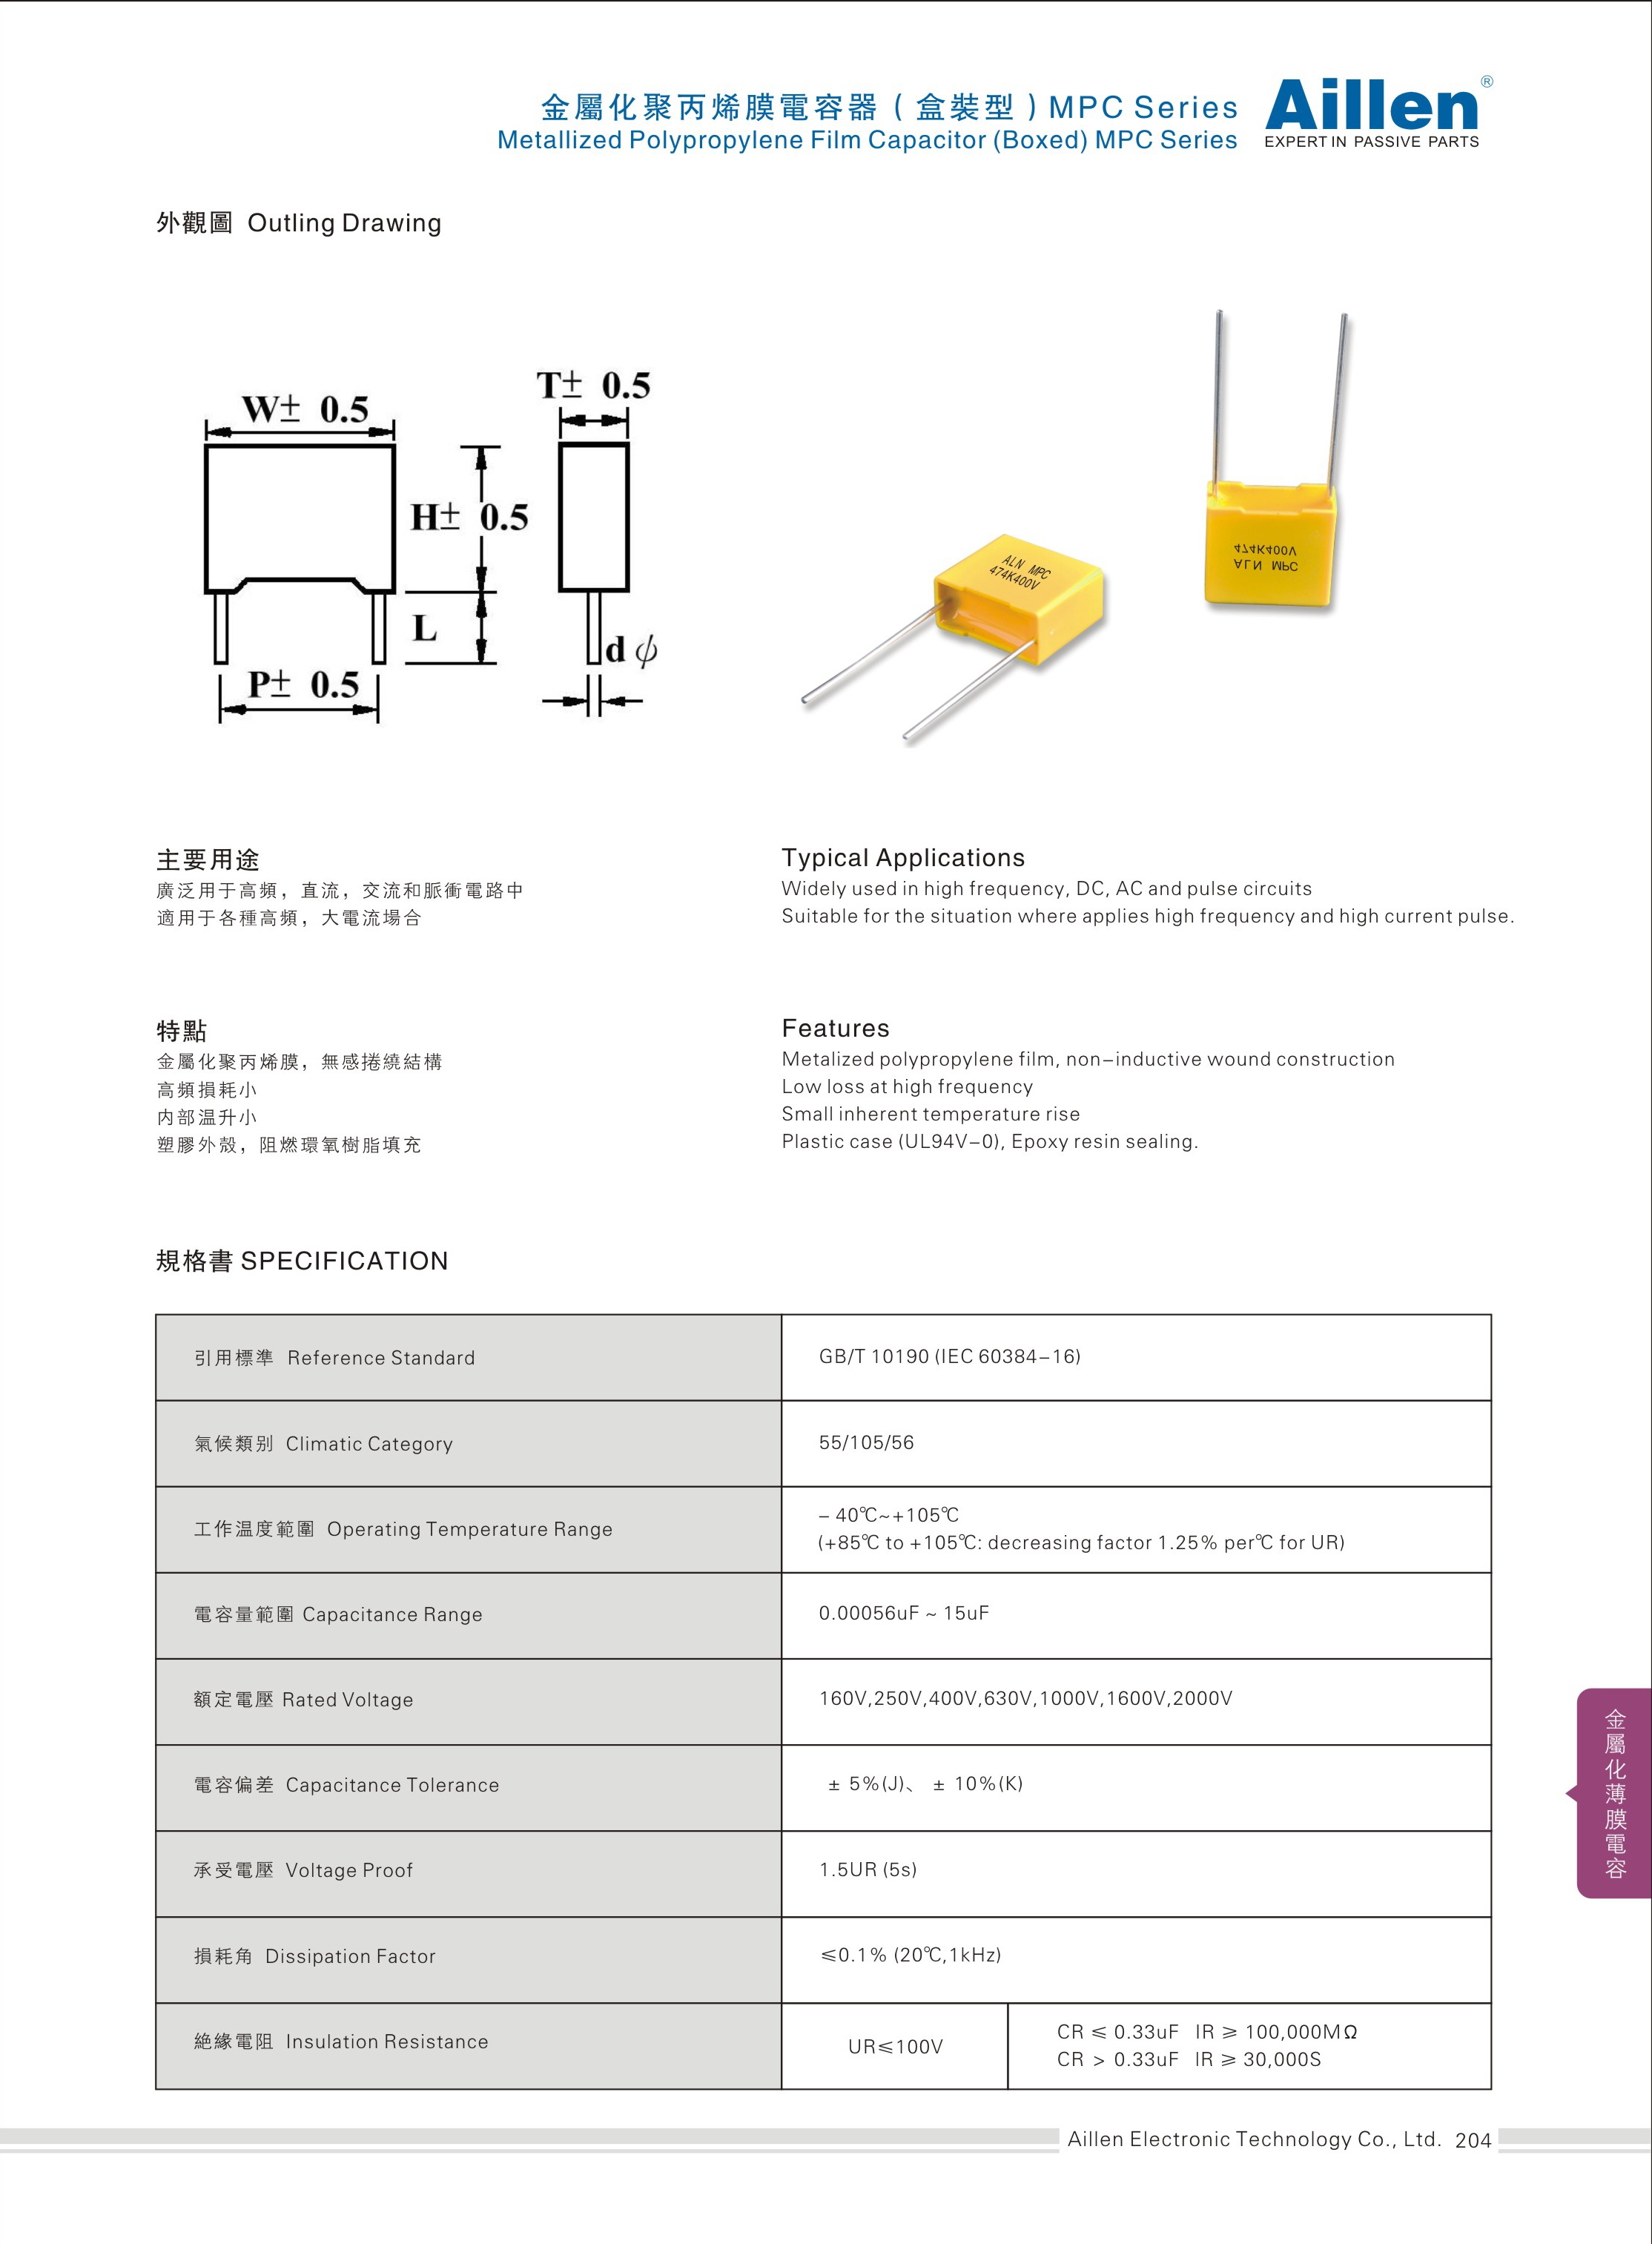 Metallized polypropylene film capacitor(Boxes) MPC series